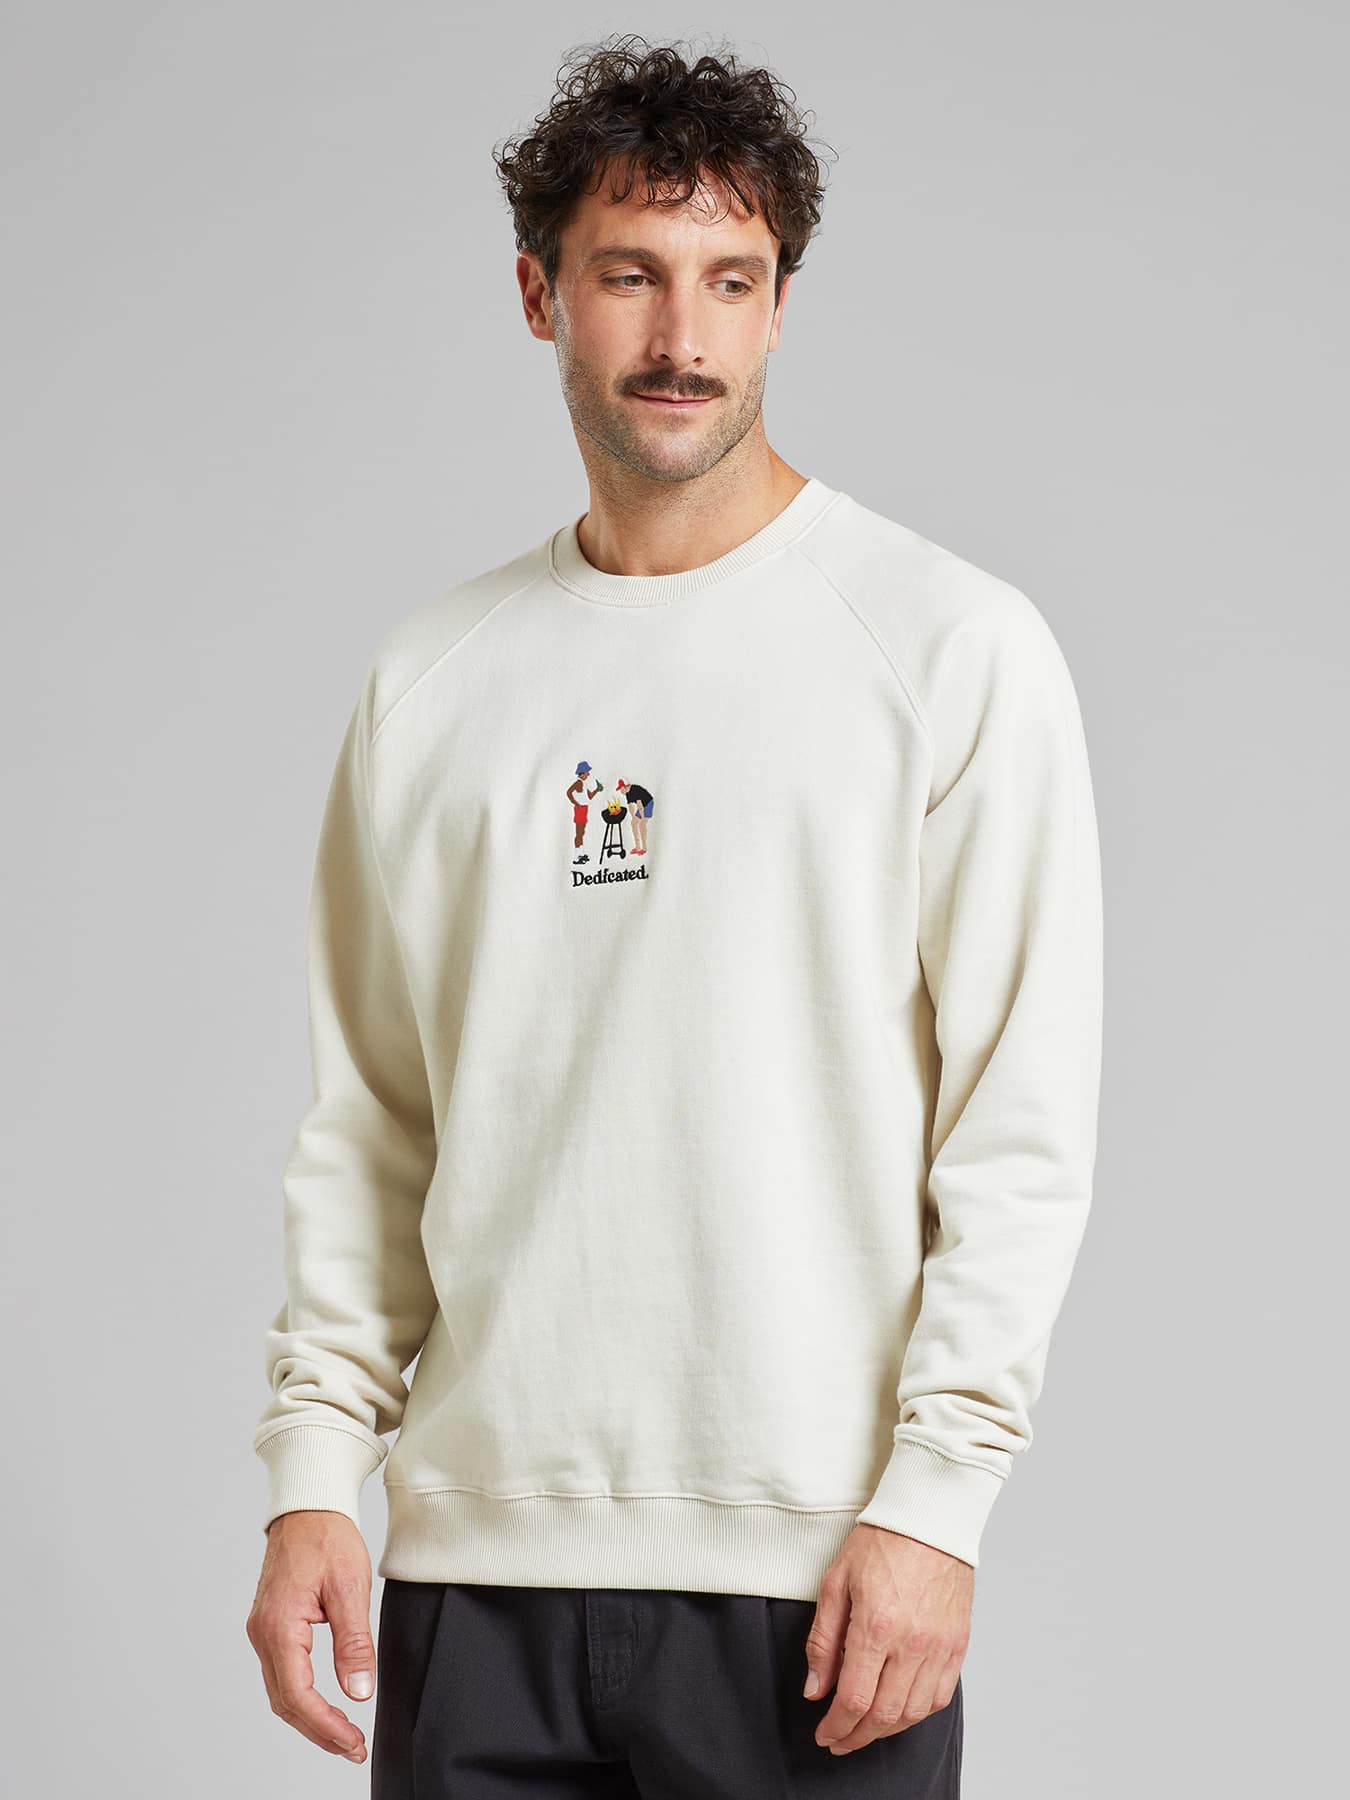 Sweatshirts & Hoodies Sweatshirt Malmoe Bbq Emb Dedicated Oat White 1